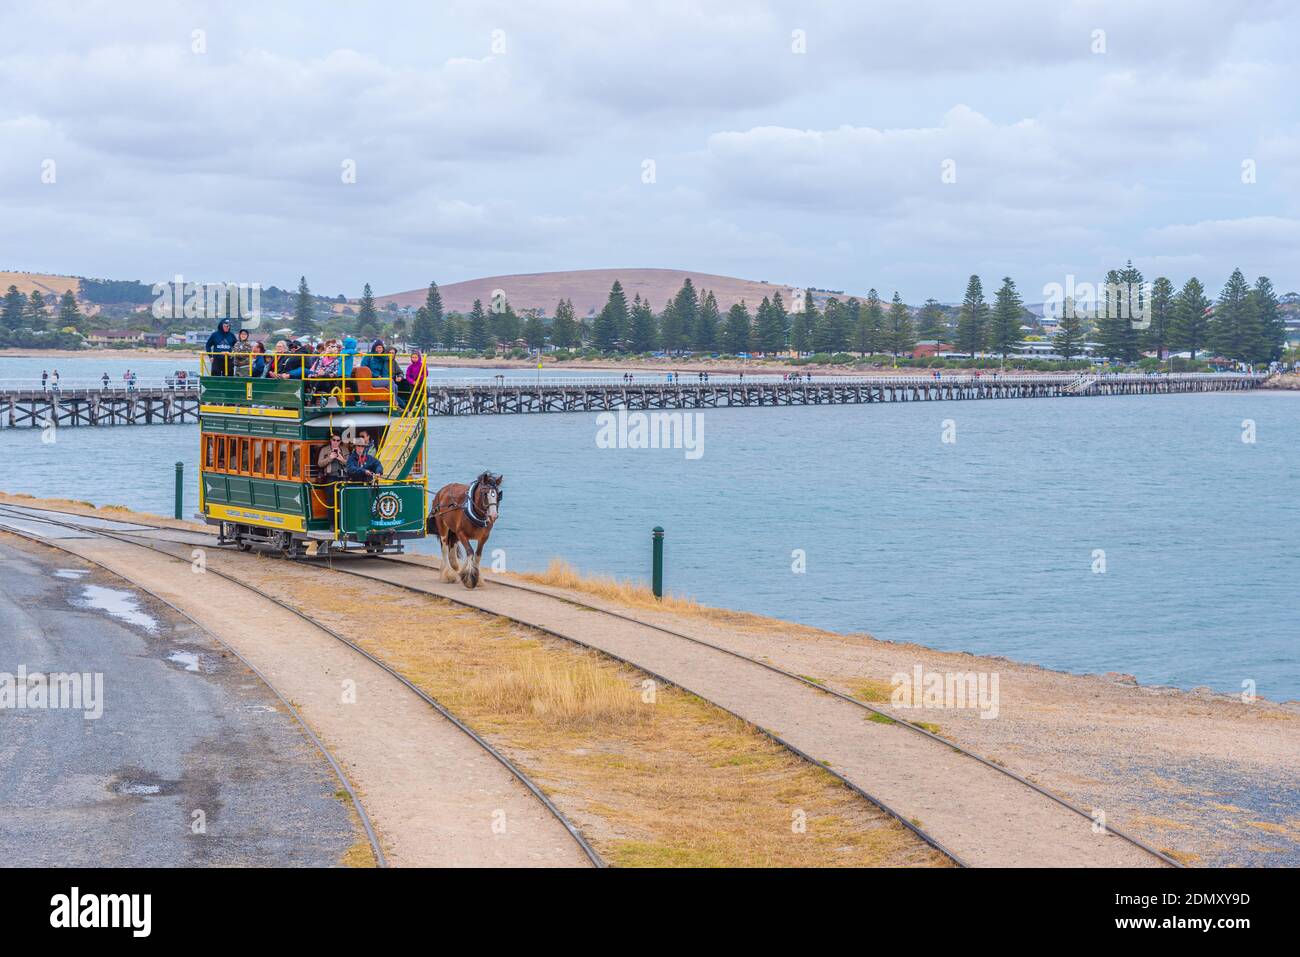 VICTOR HARBOR, AUSTRALIA, JANUARY 5, 2020: Horse drawn tram on a wooden causeway at Victor Harbor, Australia Stock Photo